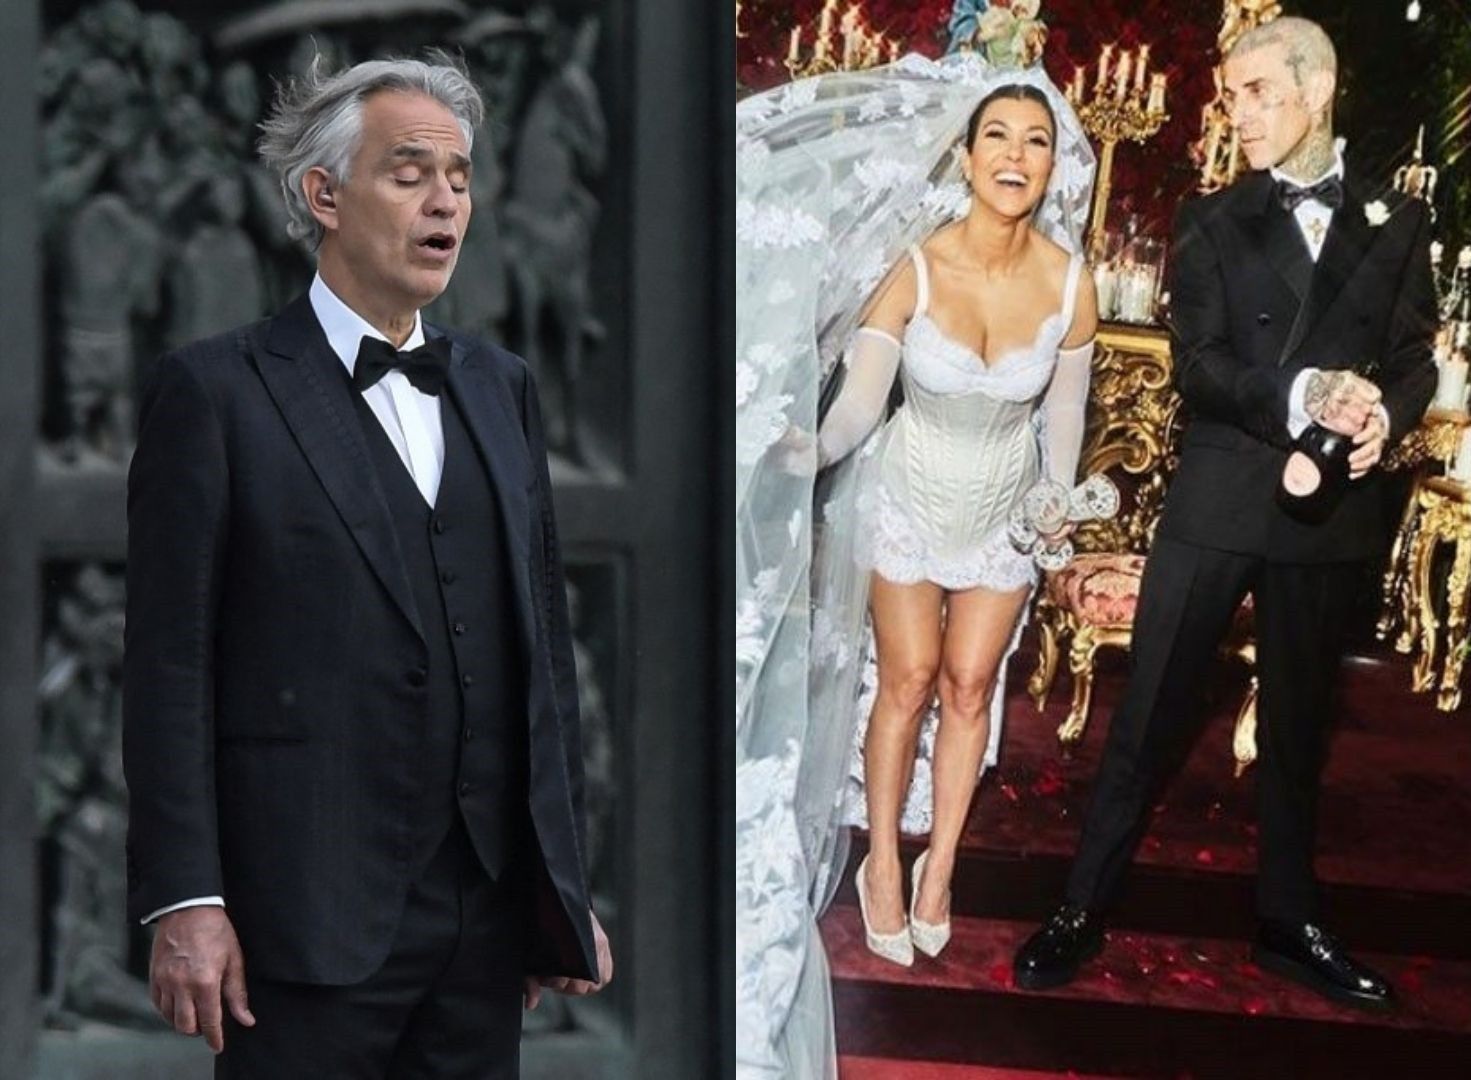 Andrea Bocelli was a surprise performer at Kourtney Kardashian and Travis Barker's wedding